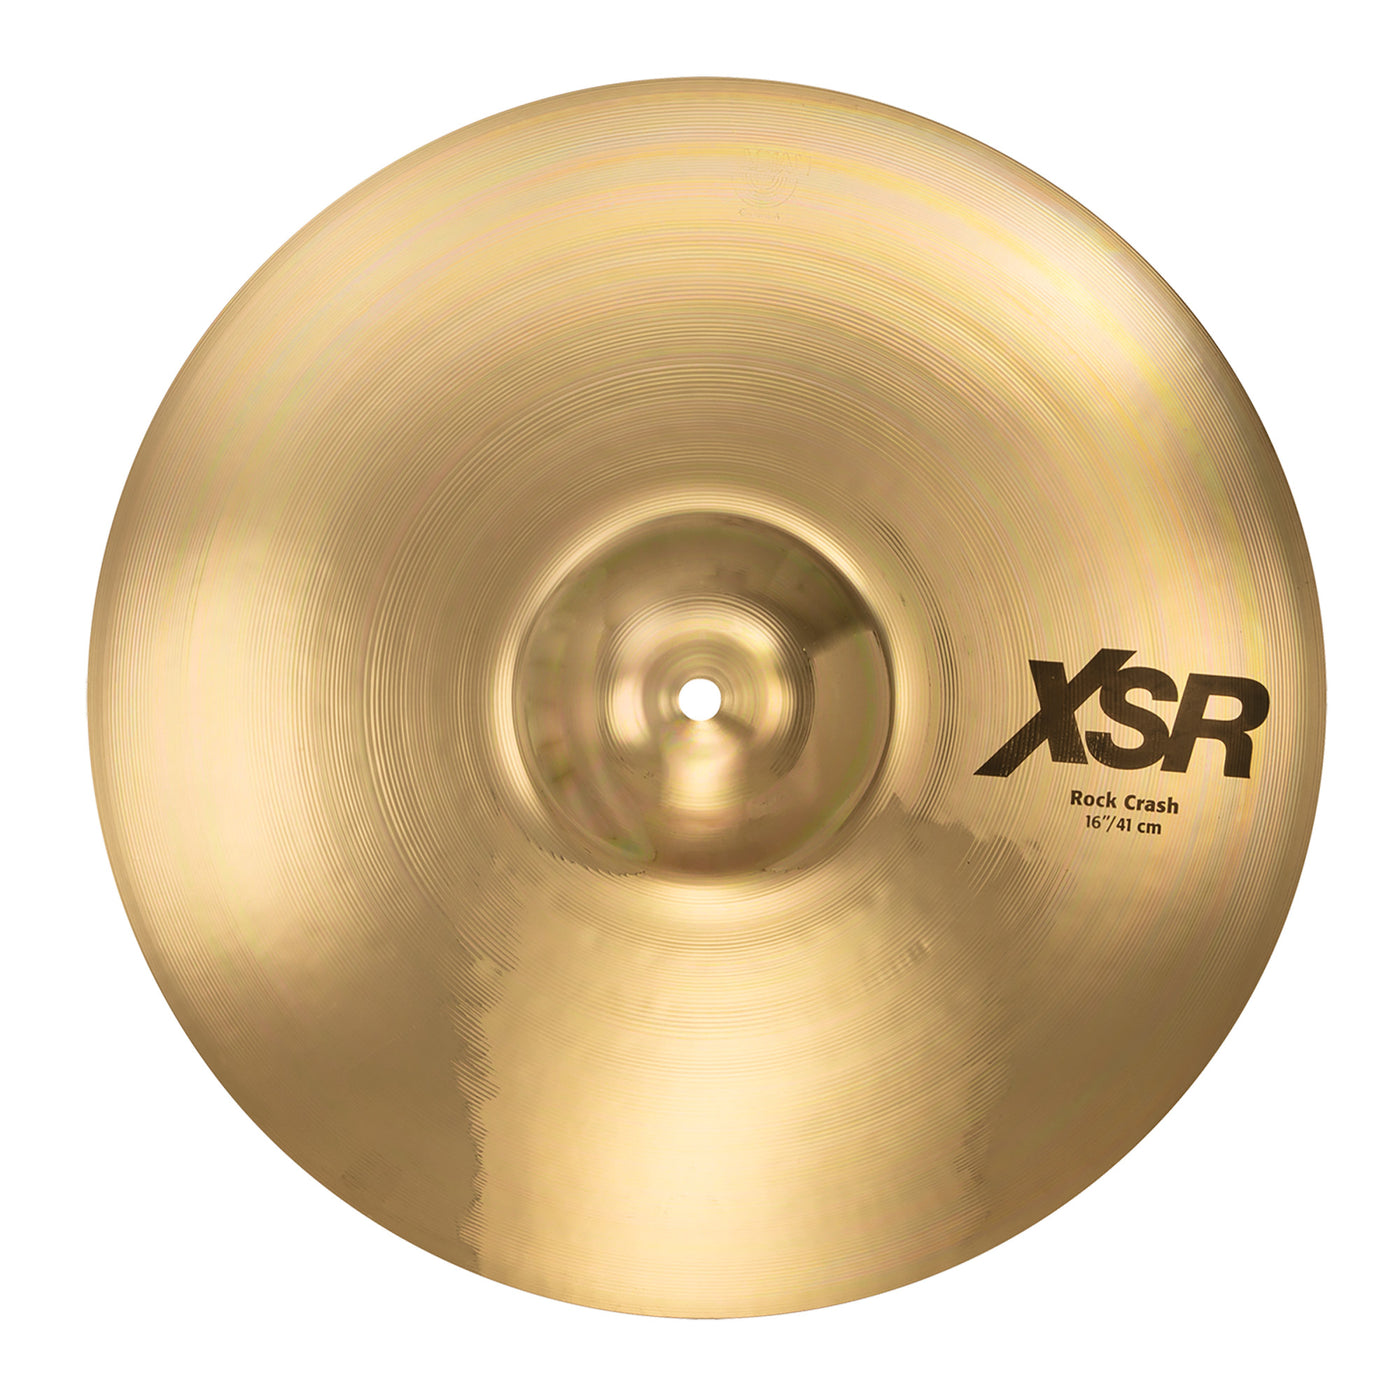 Sabian 16" XSR Rock Crash Cymbal - Brilliant Finish